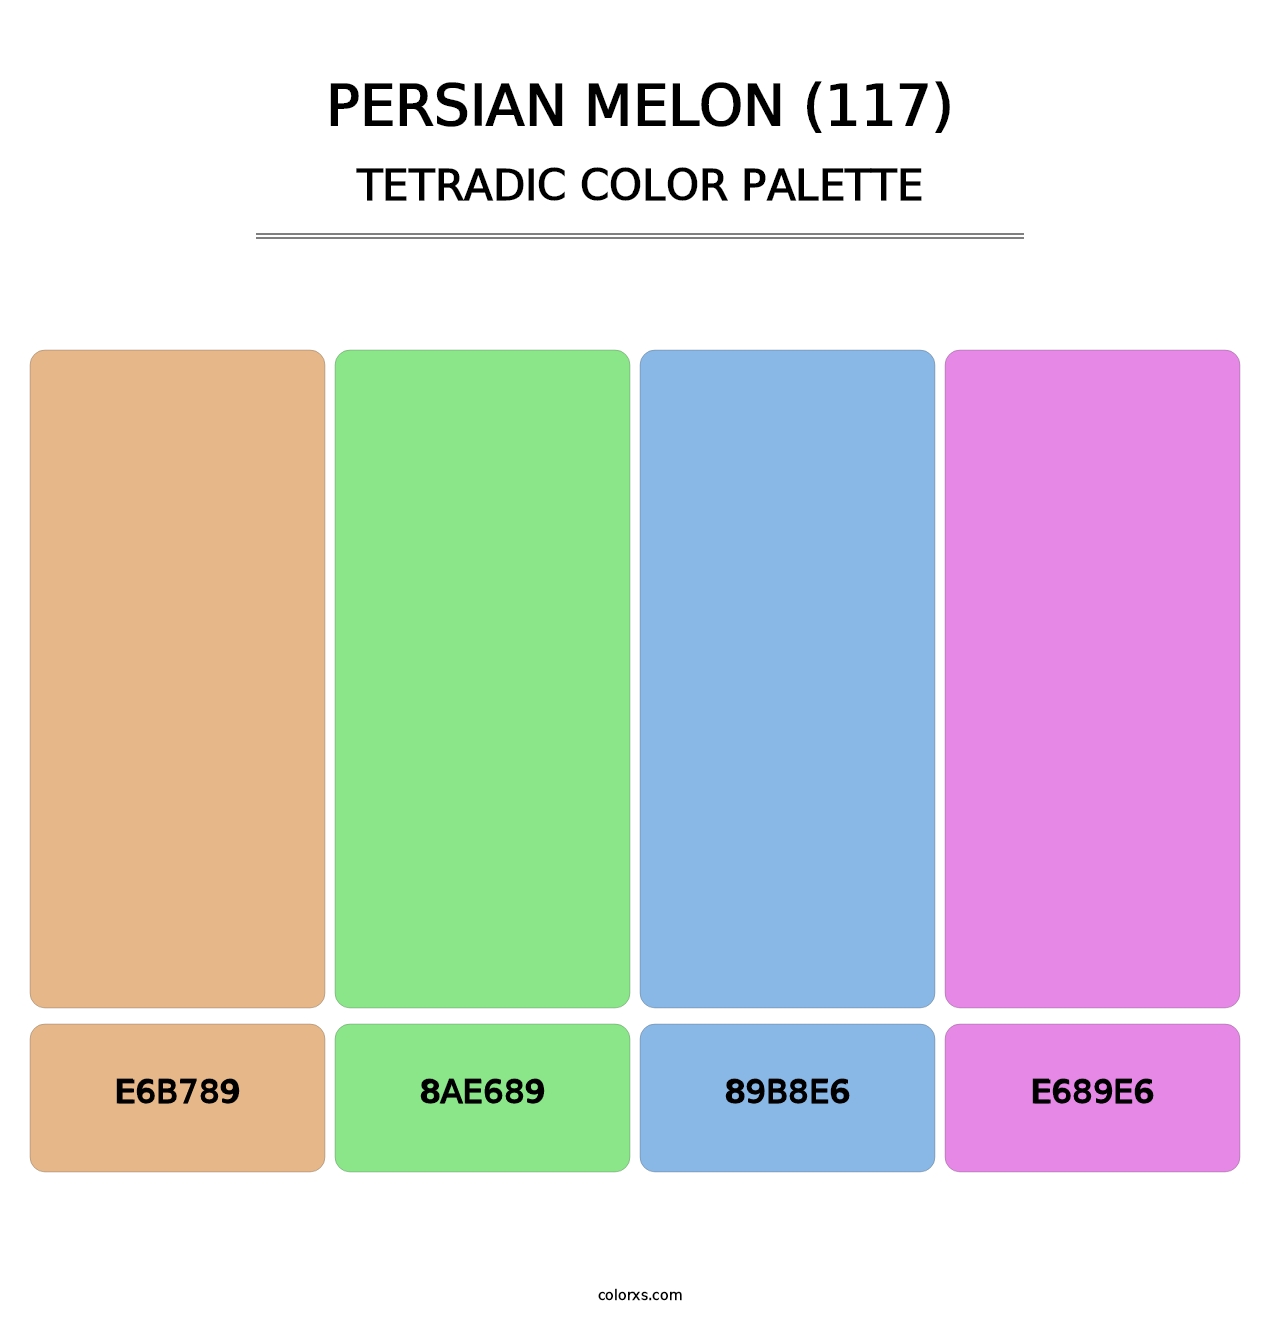 Persian Melon (117) - Tetradic Color Palette